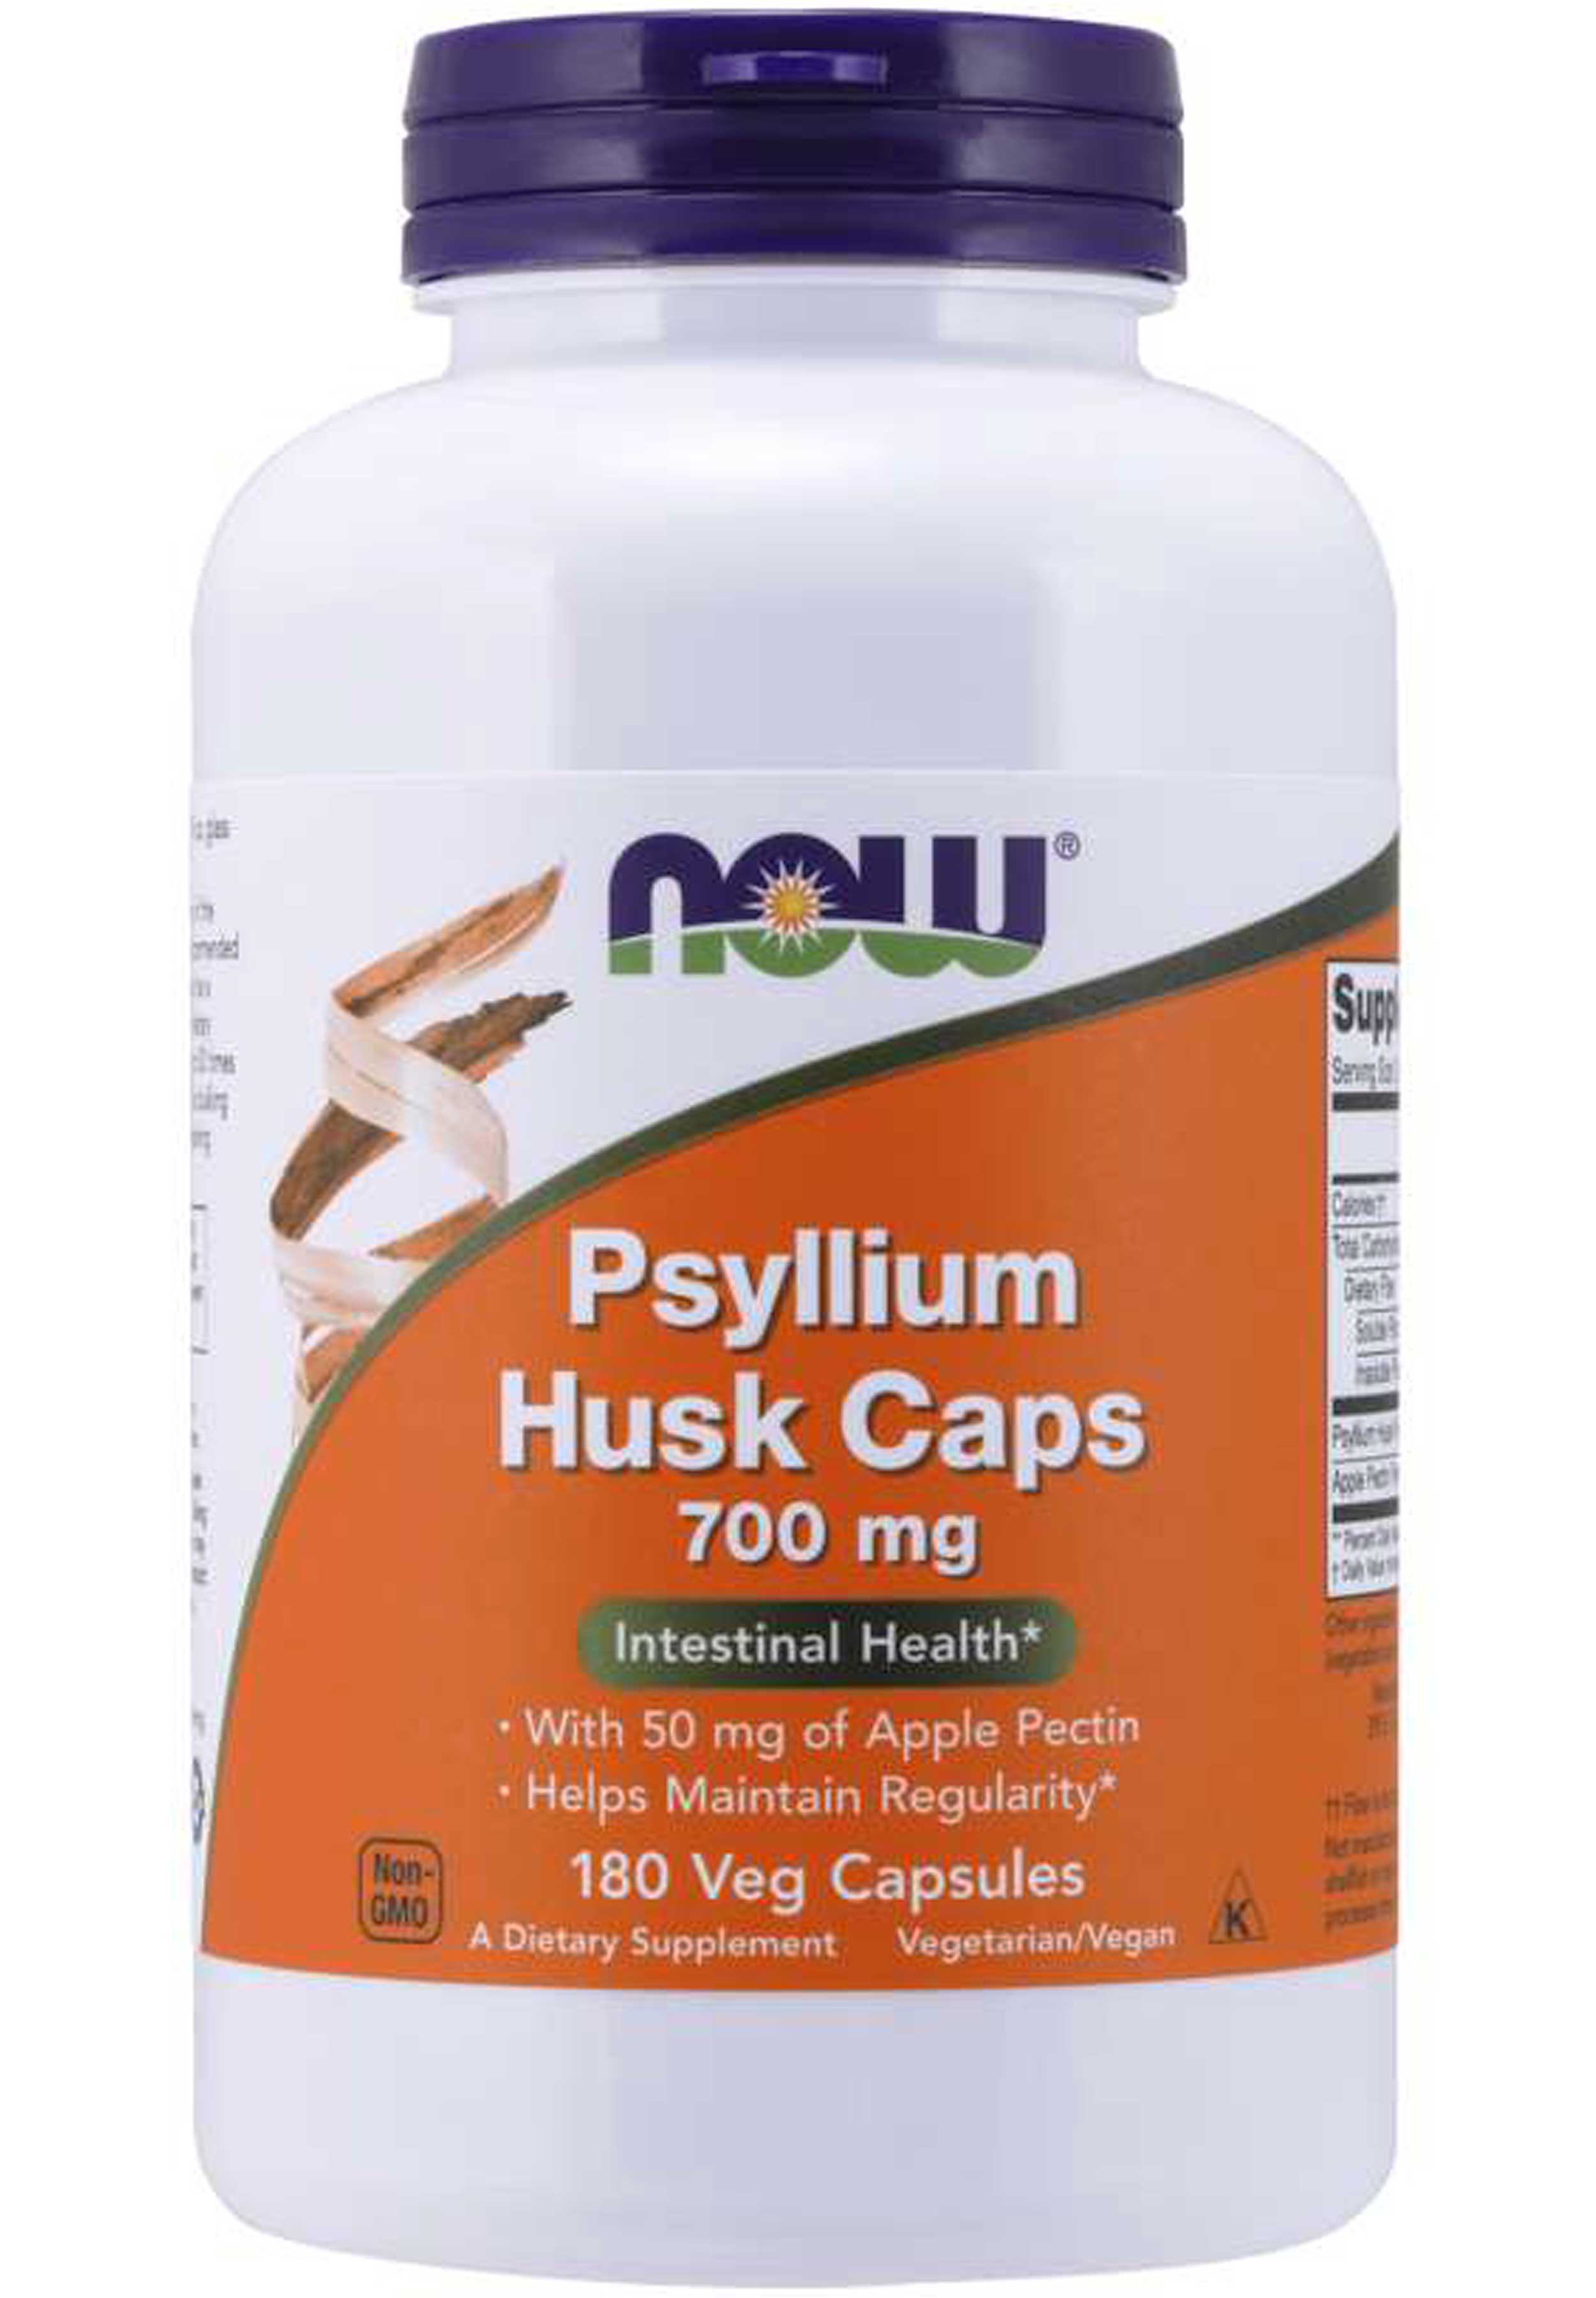 NOW Psyllium Husk Caps 700 mg